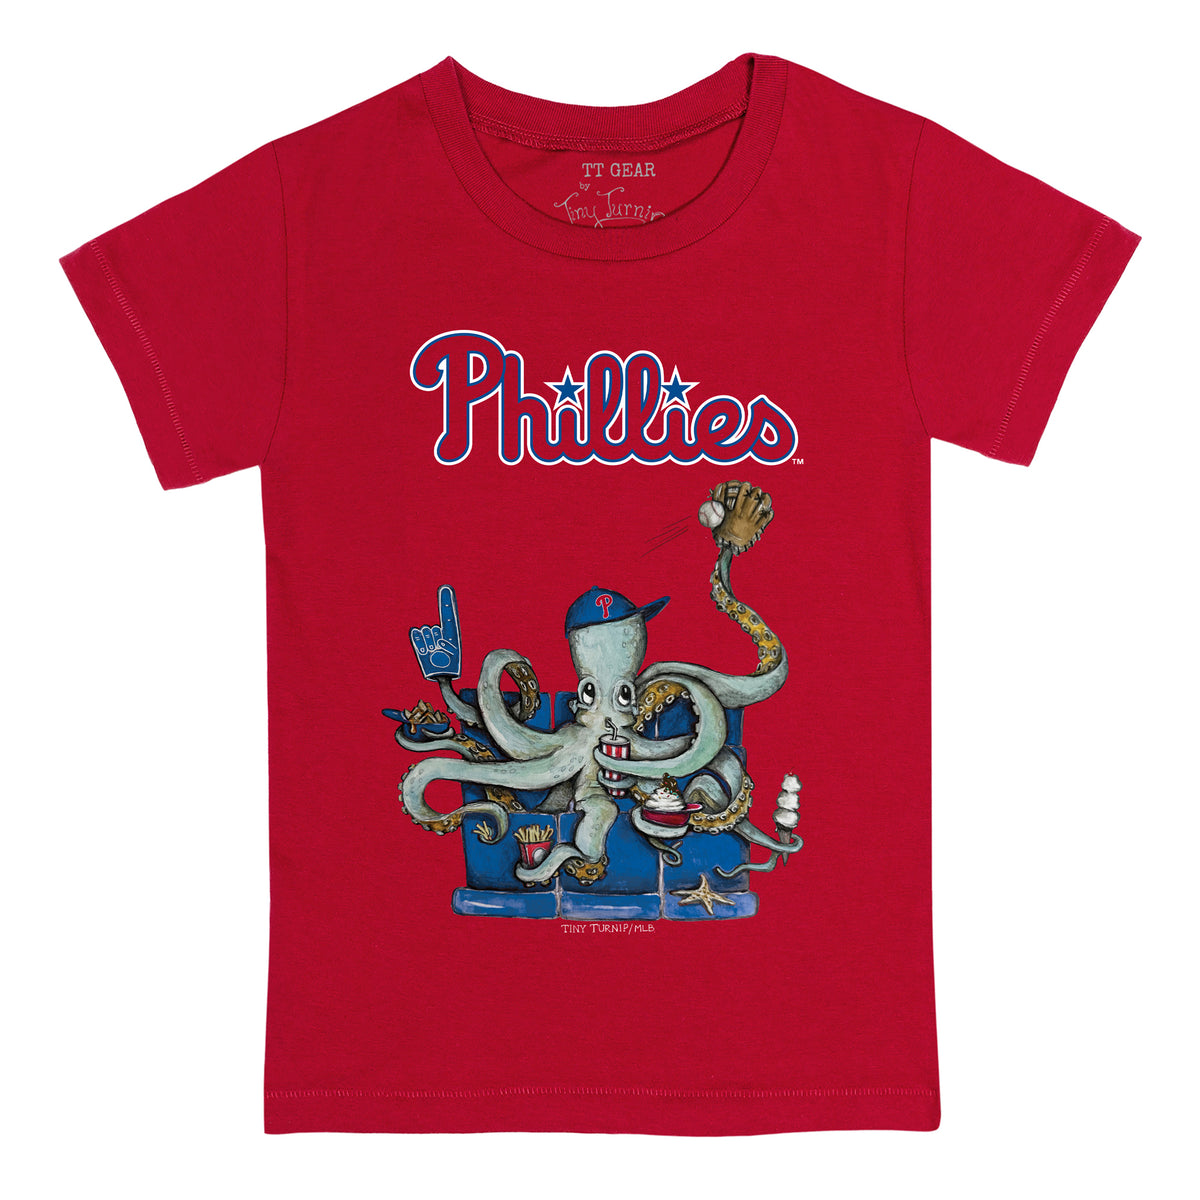 Philadelphia Phillies Octopus Tee Shirt